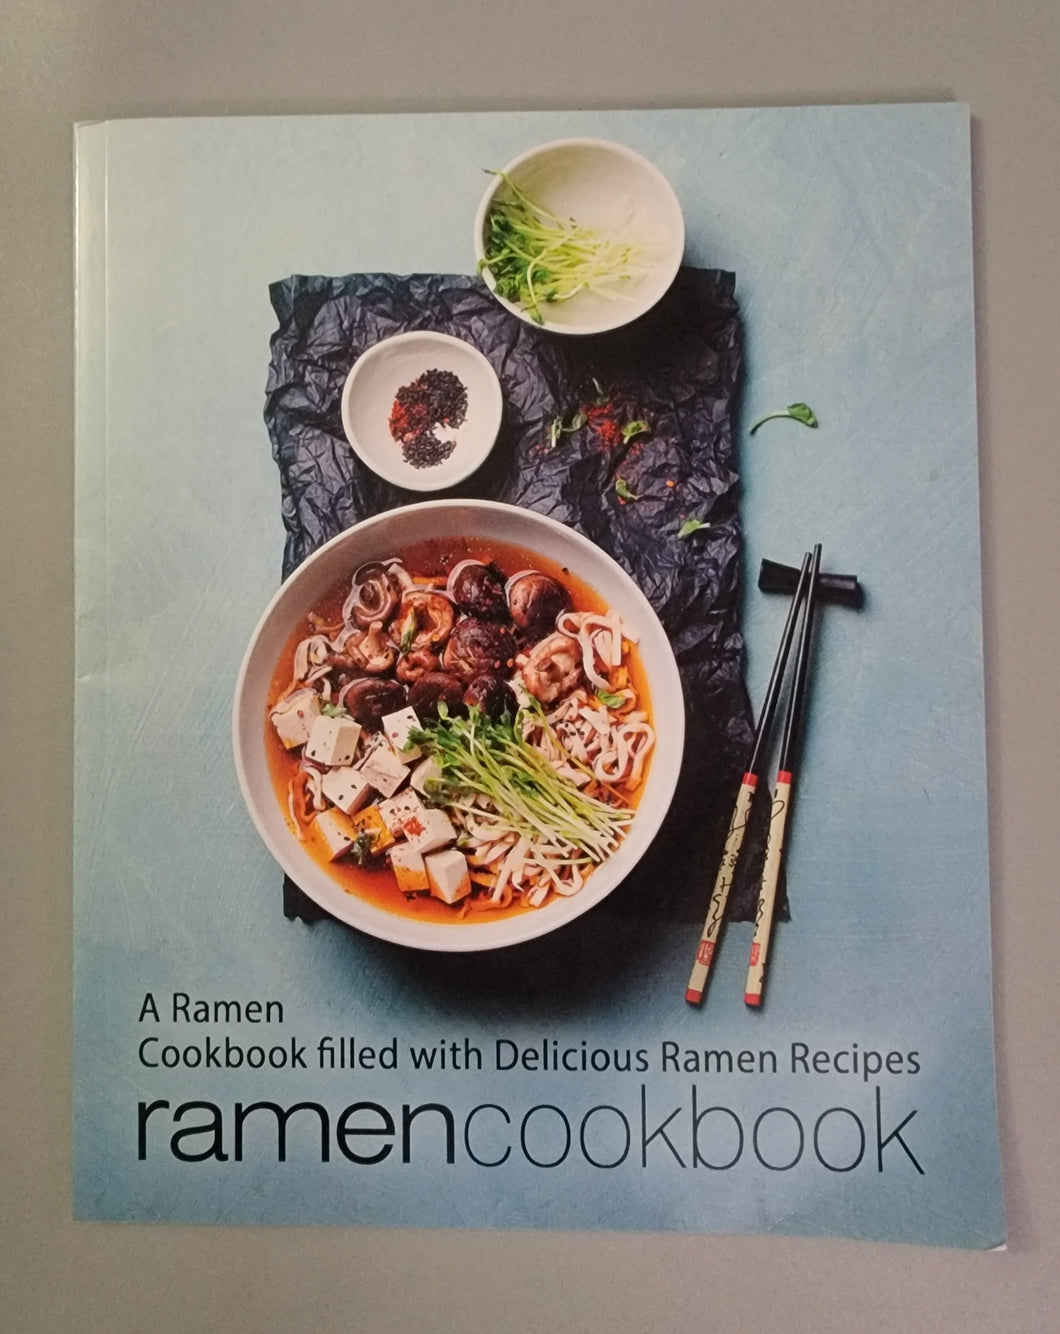 Ramen Cookbook: A Ramen Cookbook Filled with Delicious Ramen Recipes Paperback – September 5, 2017